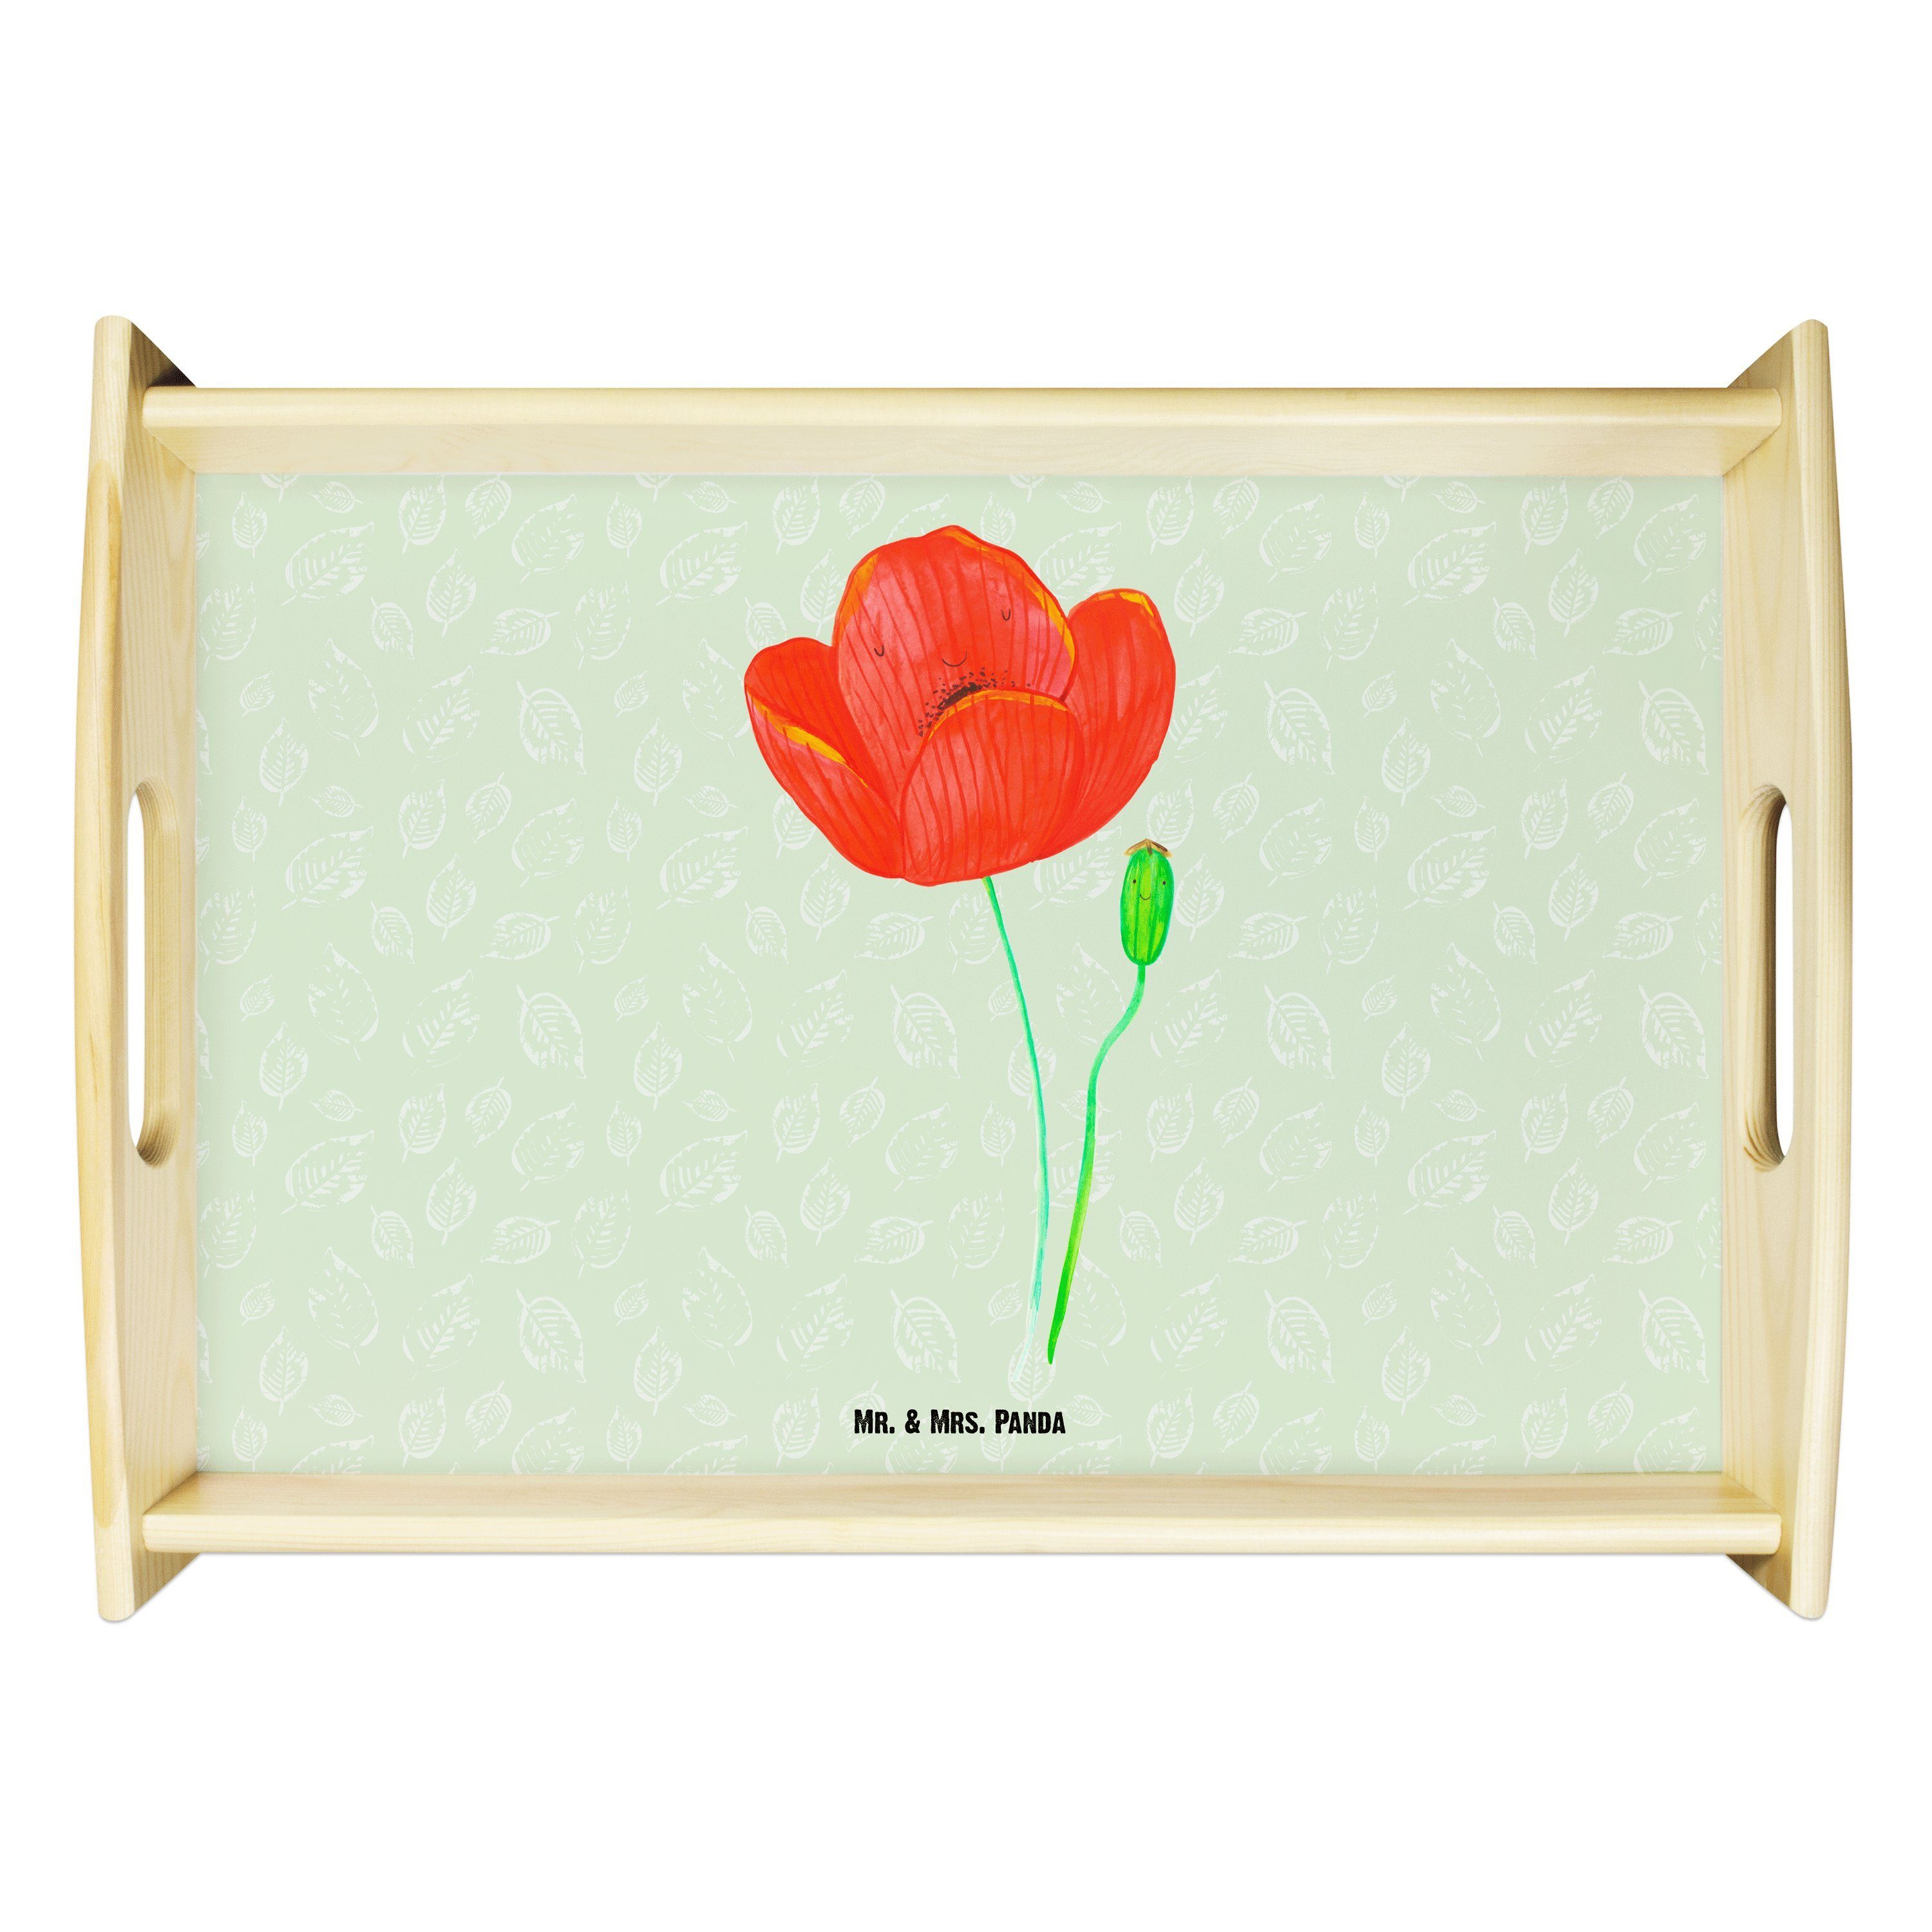 Mr. & Mrs. Panda Tablett Mohnblume - Blattgrün - Geschenk, Blumen, Küchentablett, Naturliebe, Echtholz lasiert, (1-tlg)